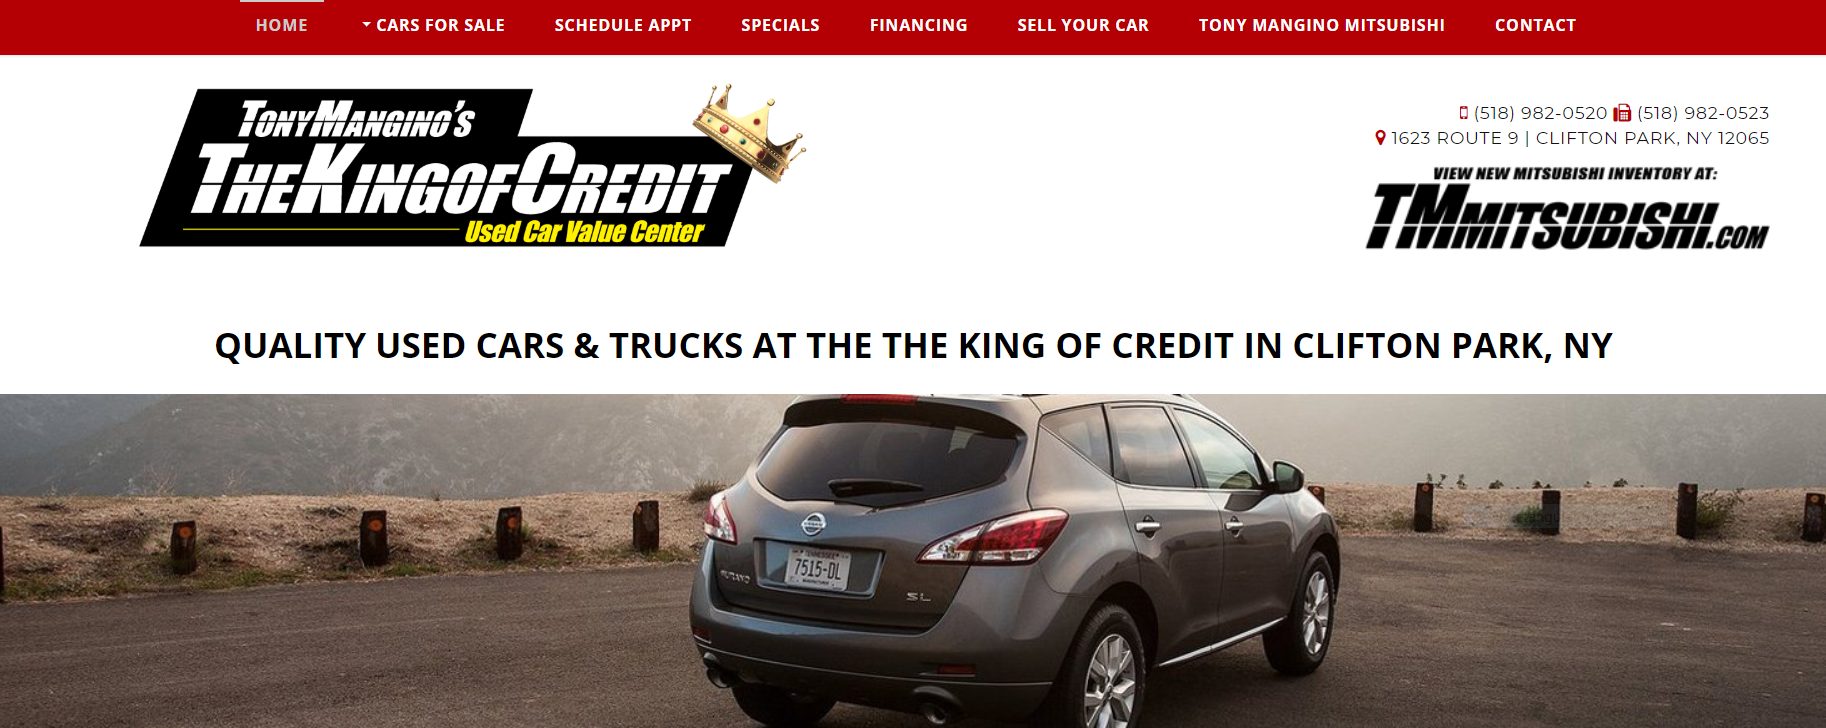 The King of Credit Car Dealership website screen shot